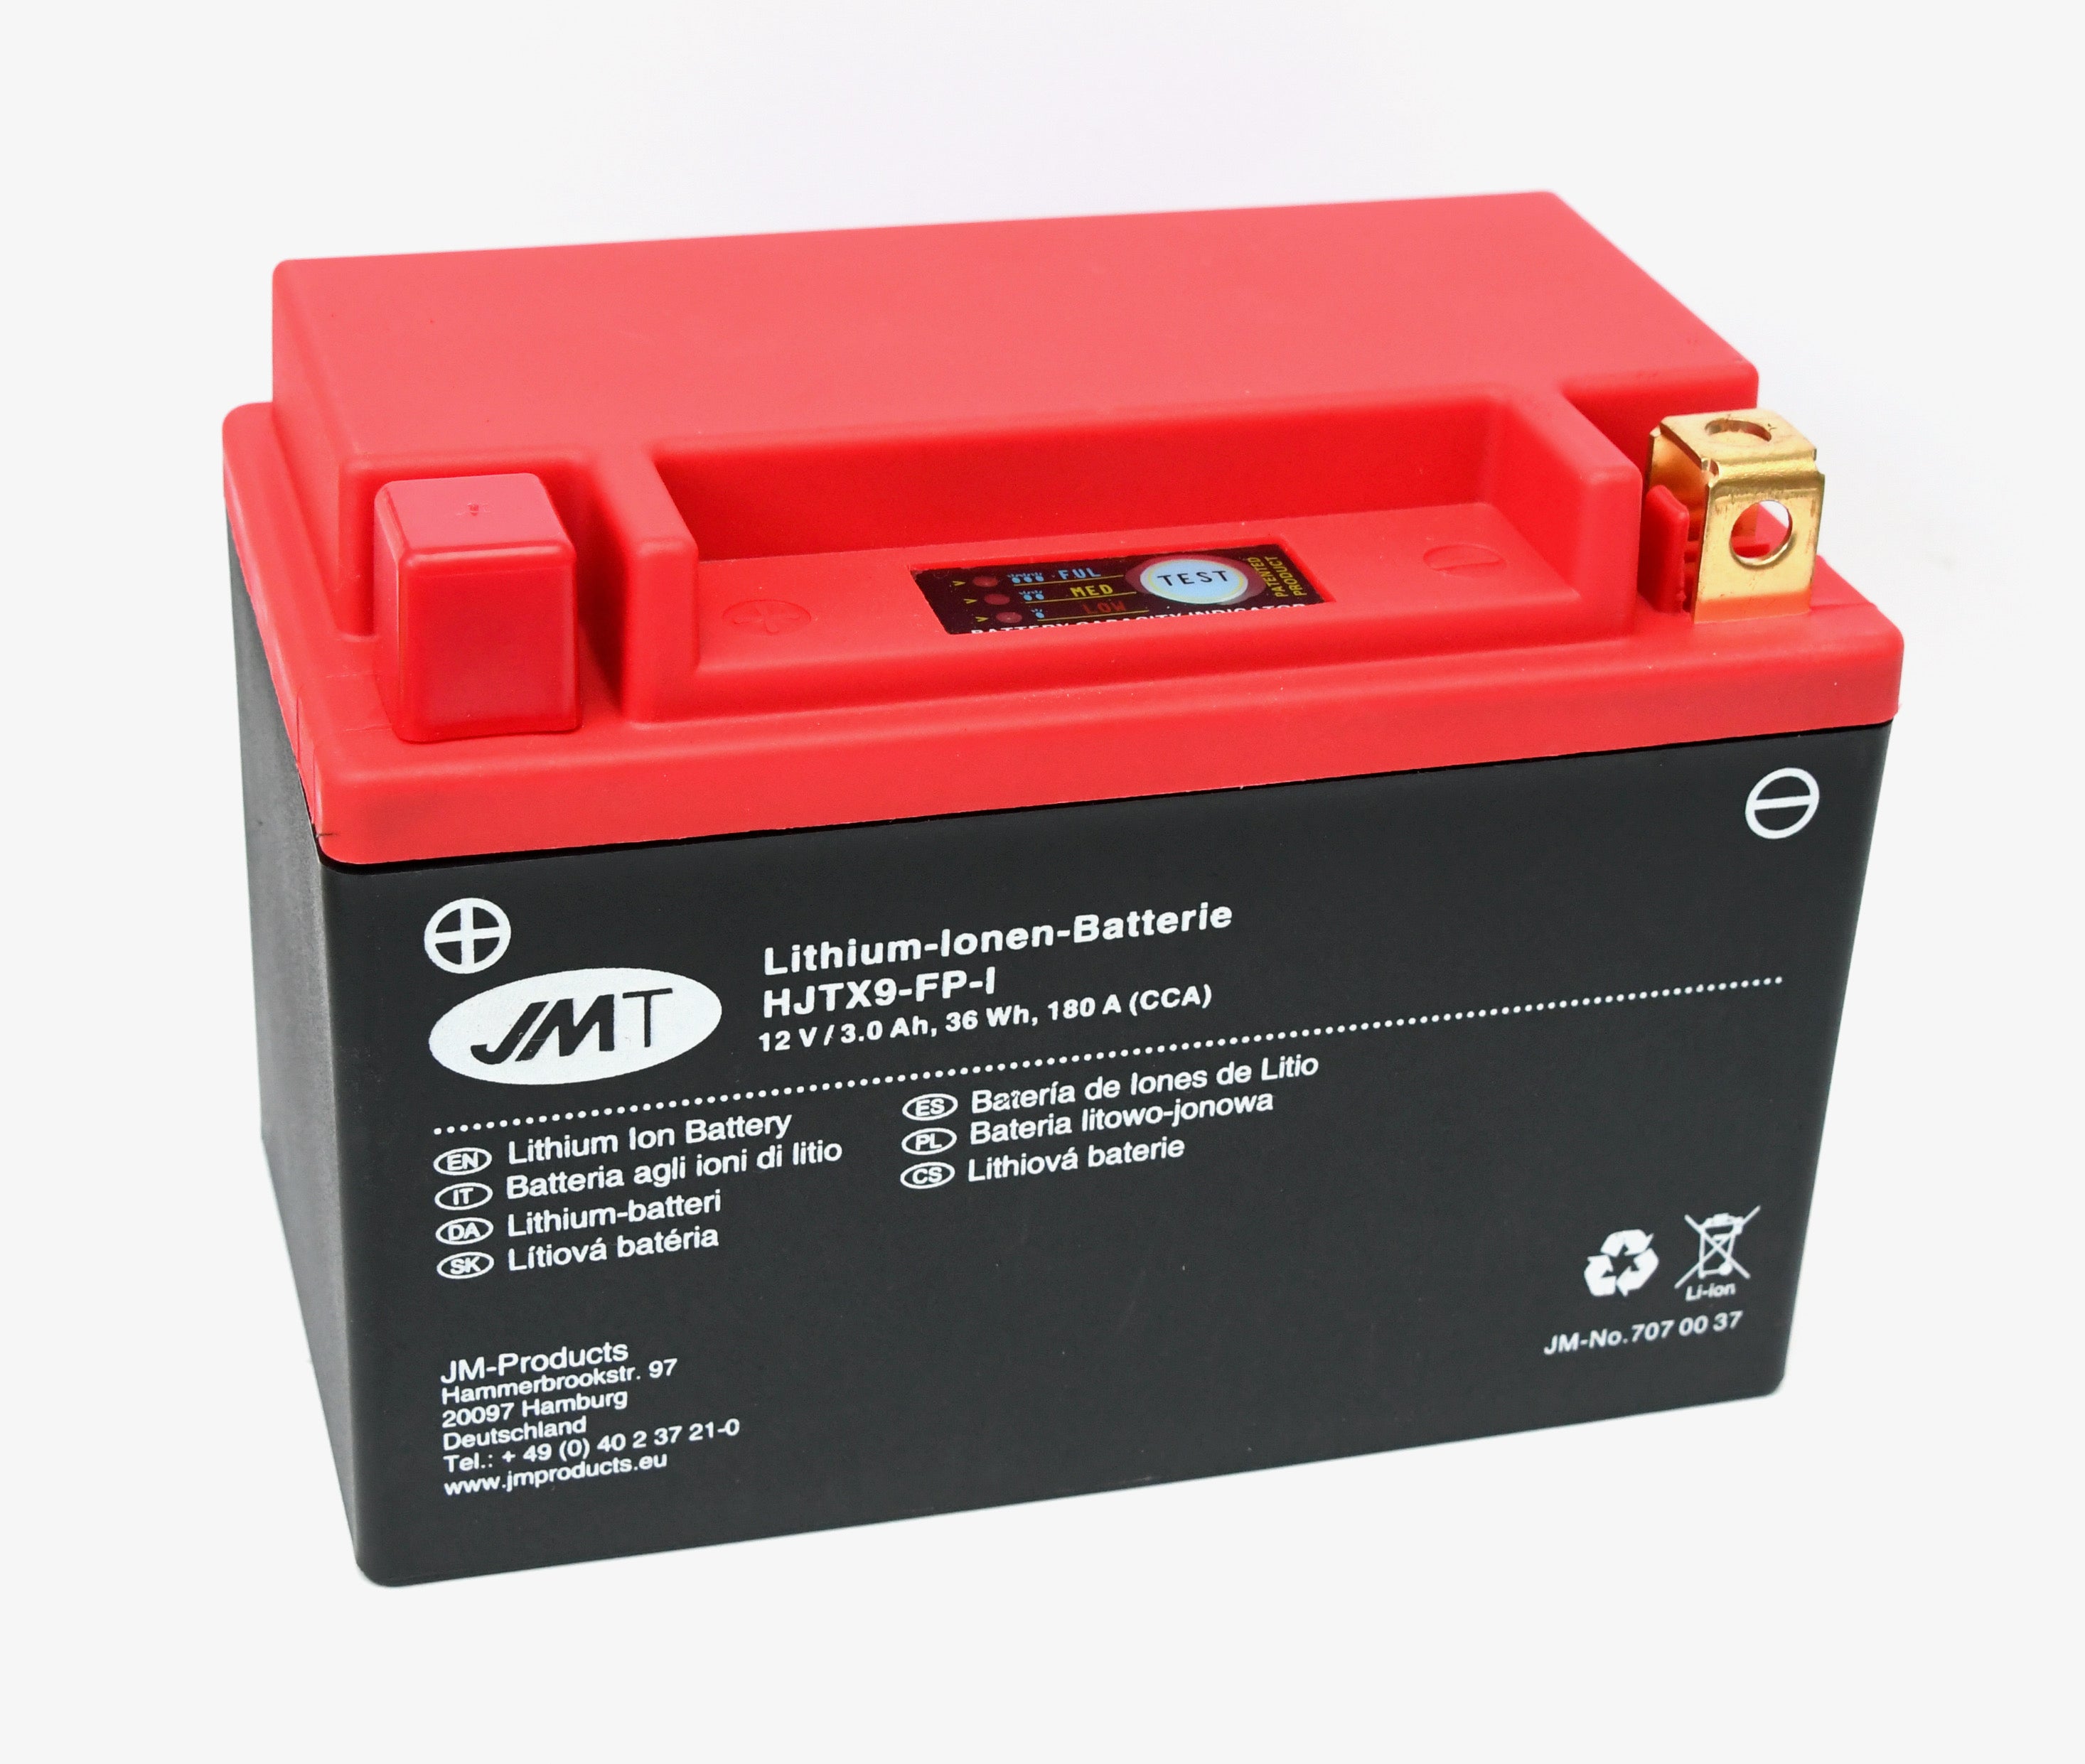 JMT Lithium Ion Battery HJTX9-FP-I